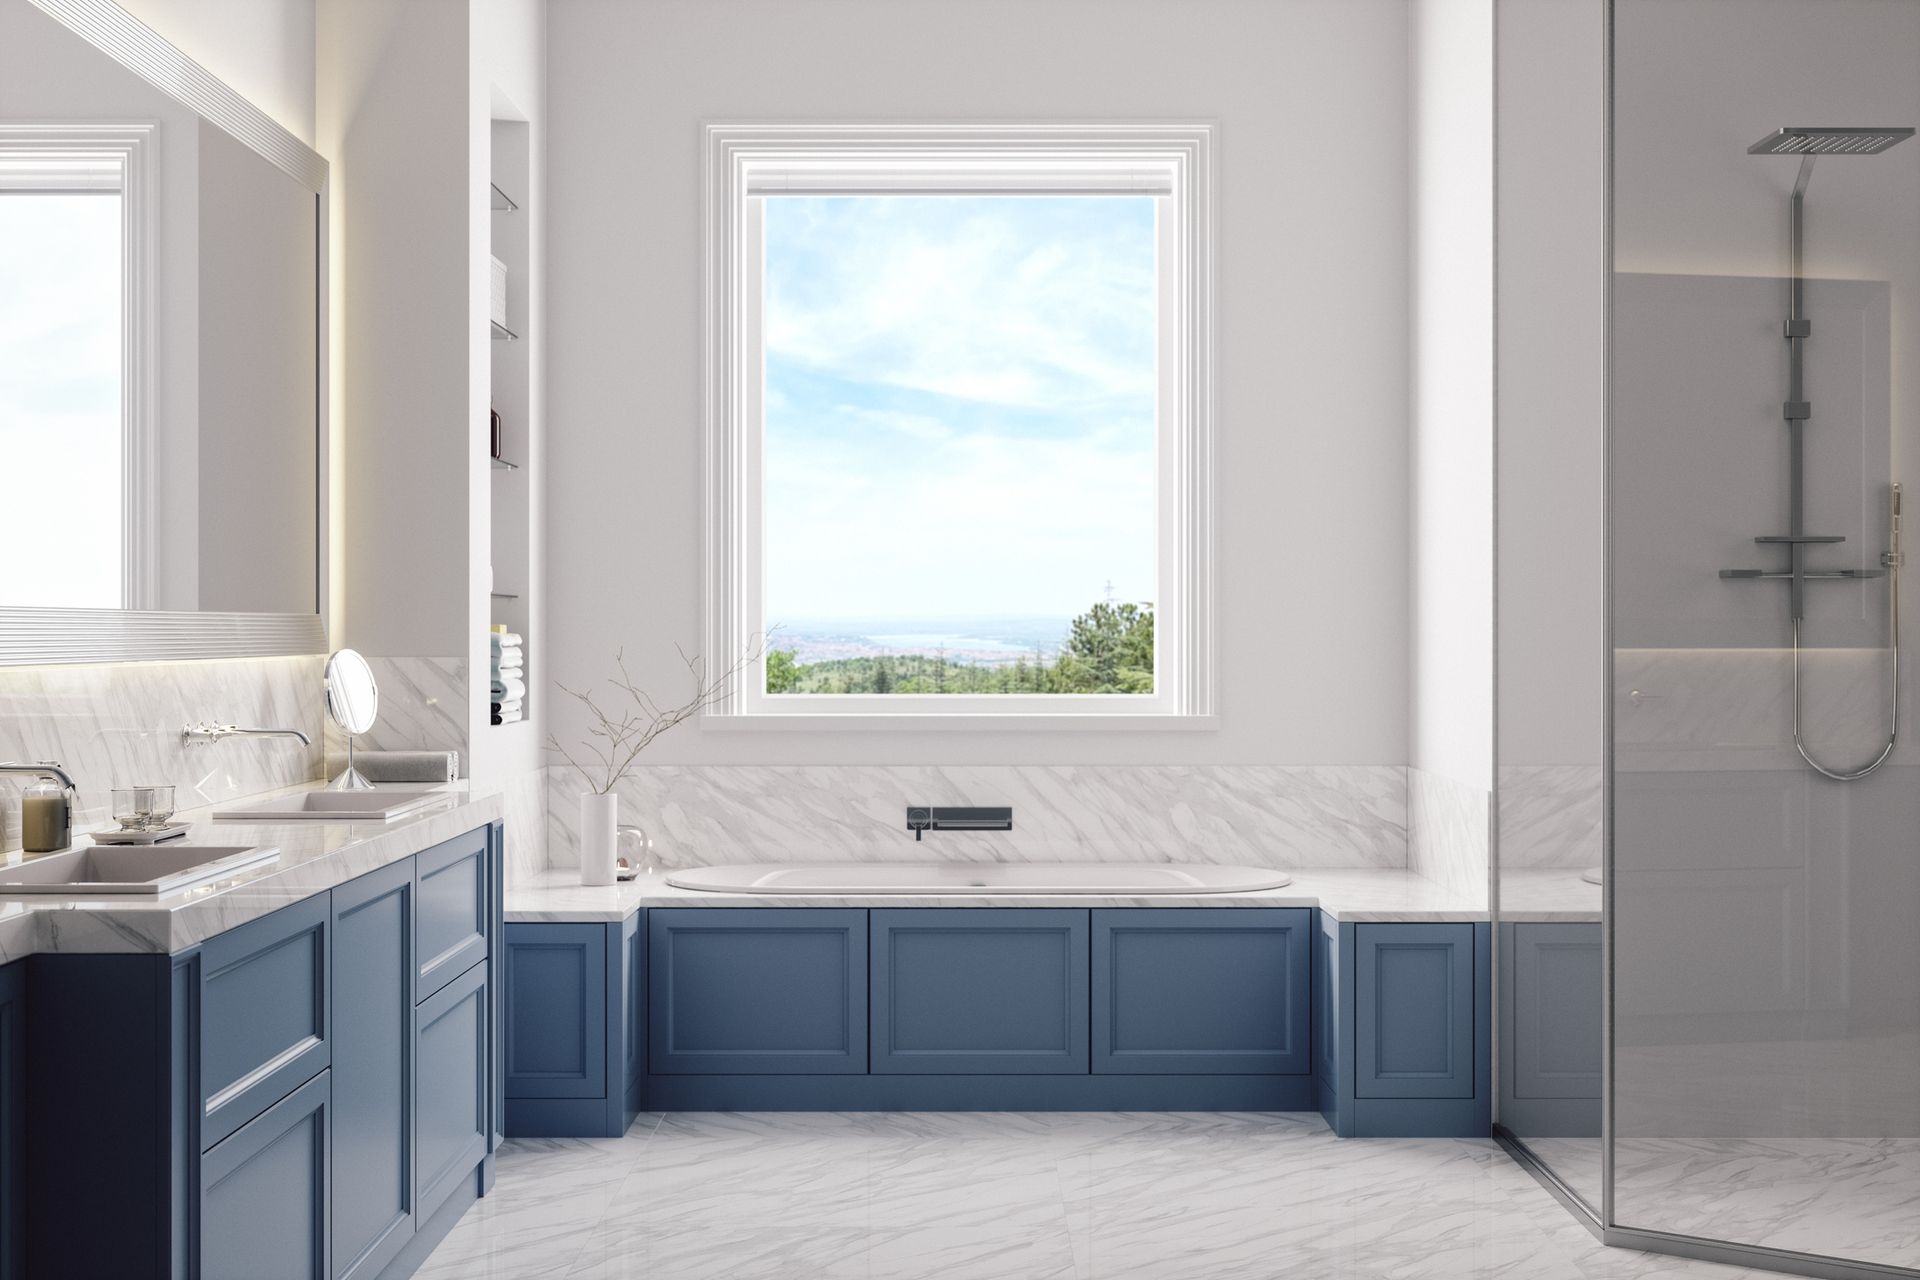 Luxury Modern Bathroom Interior With Hot Tub  — Spokane, WA  — Interior Renovations